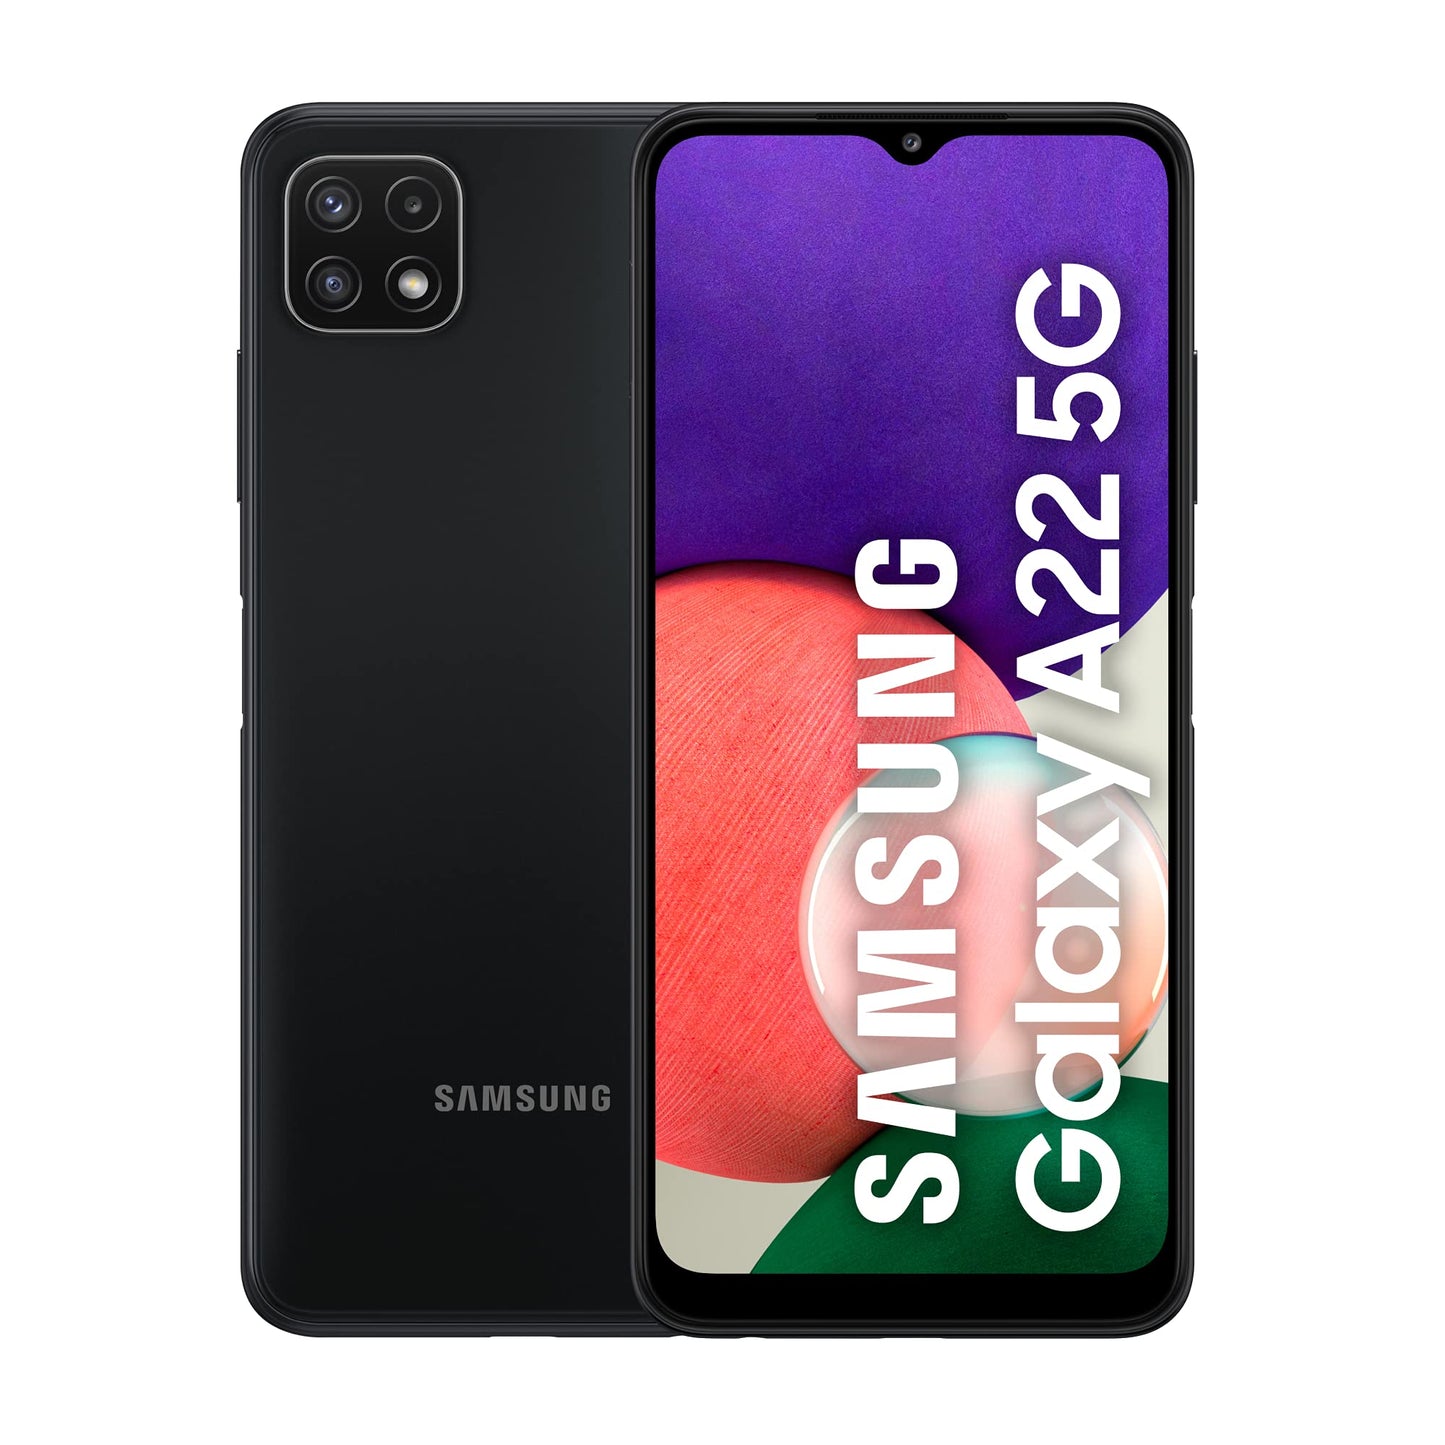 Samsung Galaxy A22 - 64GB - Black - Unlocked (SPT3662)